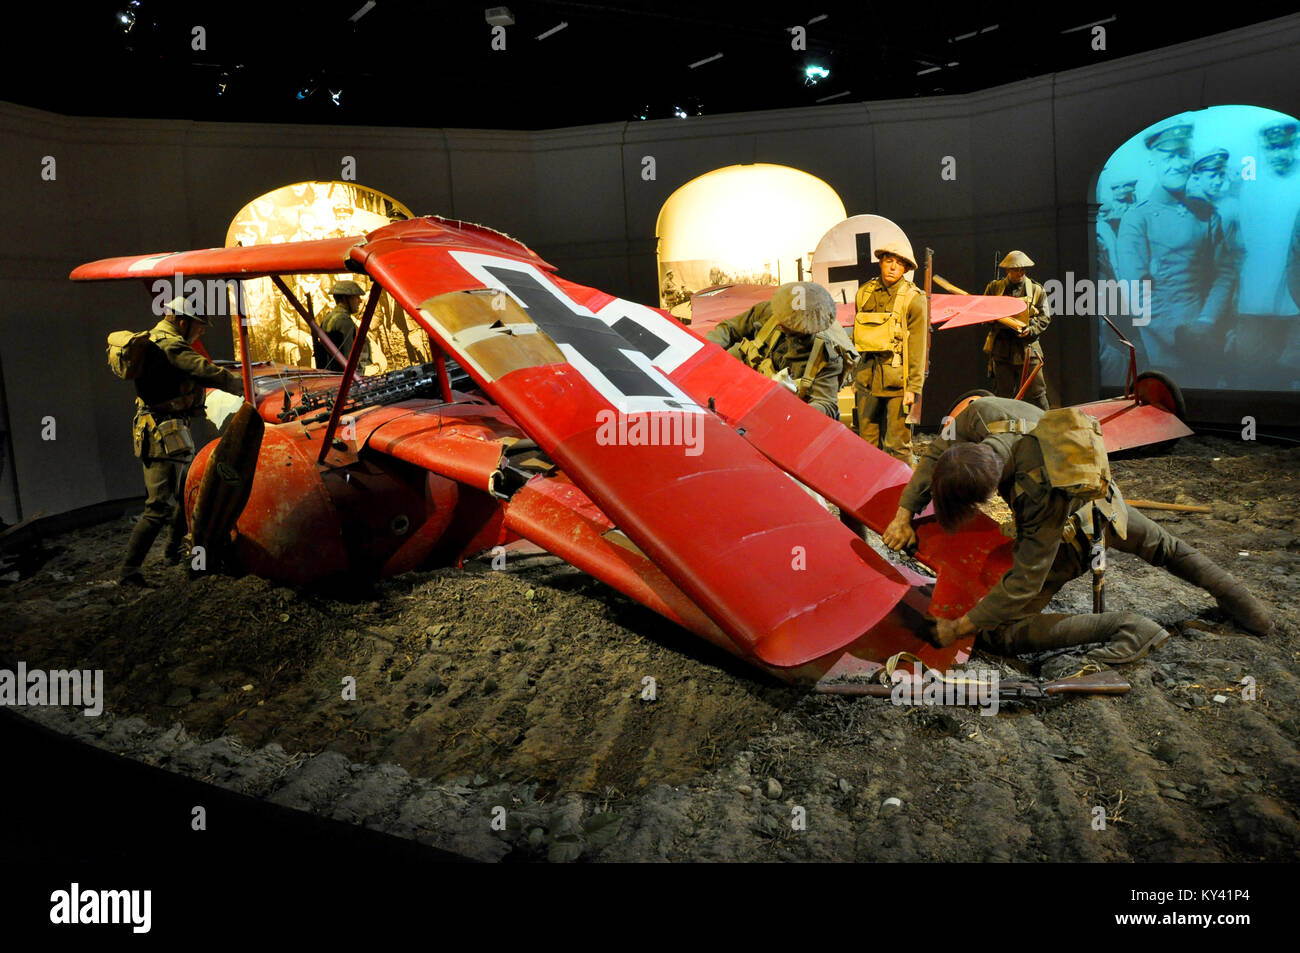 Manfred von richthofen crash hi-res stock photography and images - Alamy